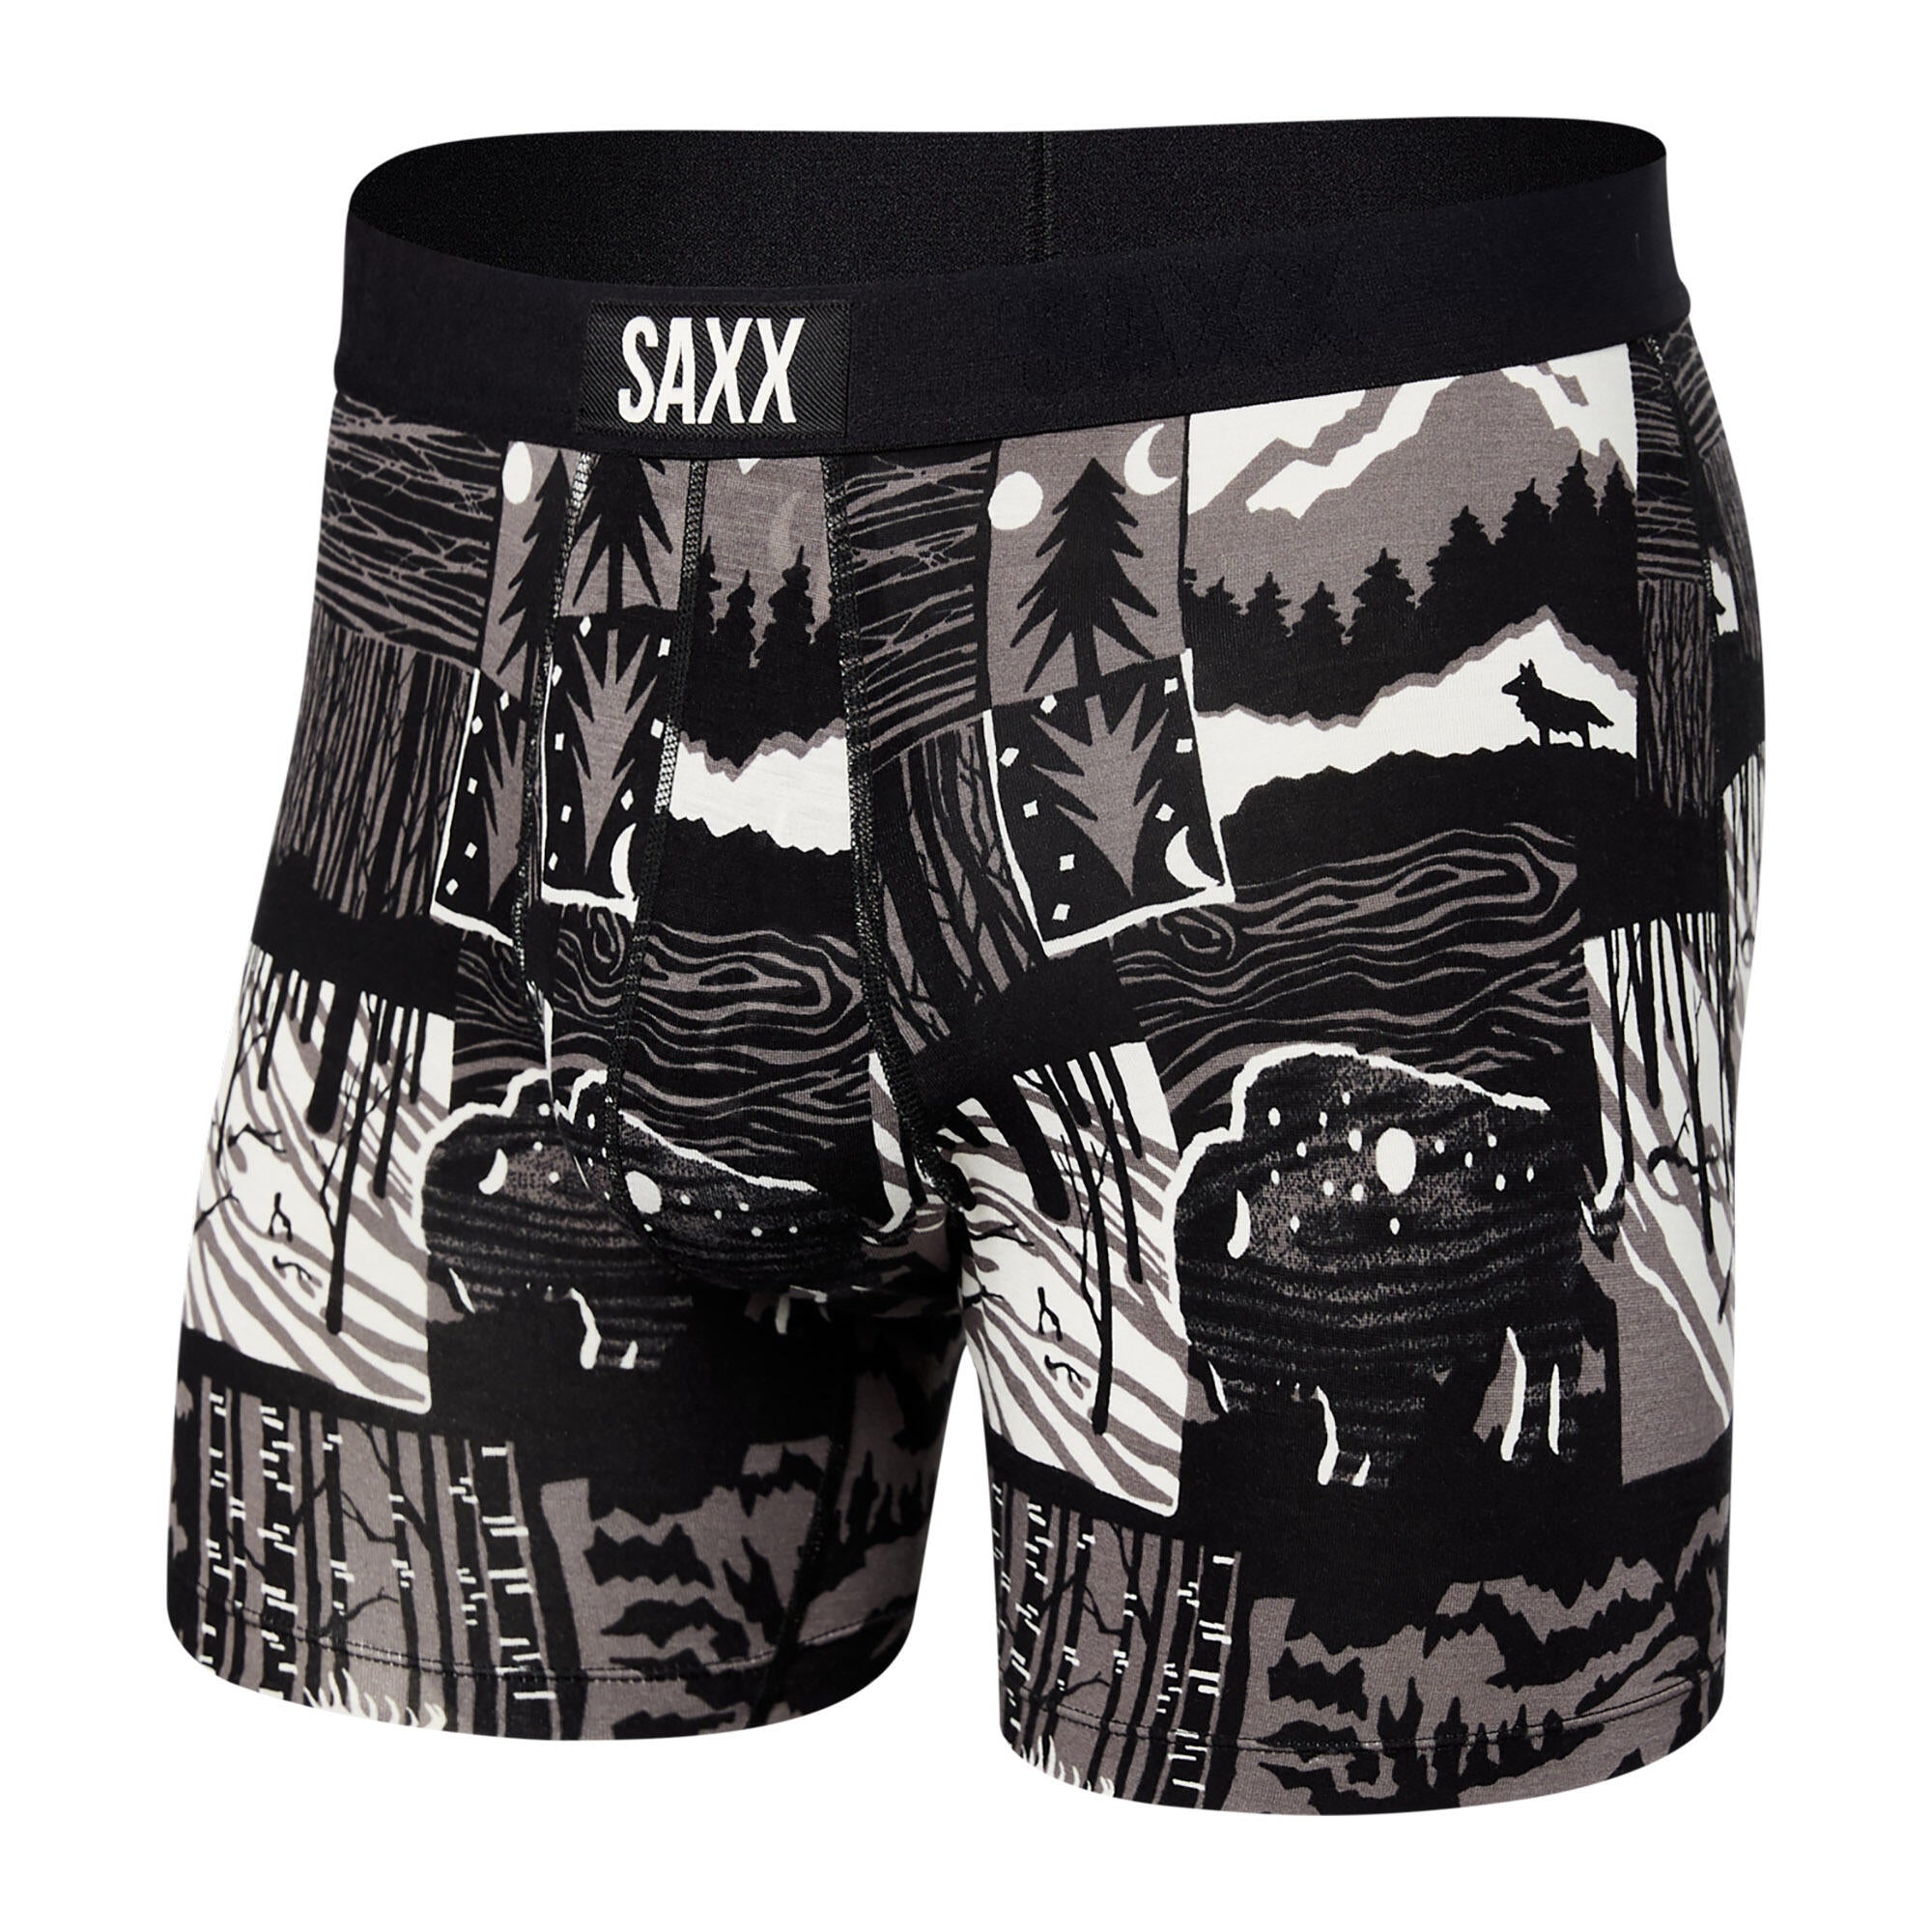 Saxx Boxer Vibe Black